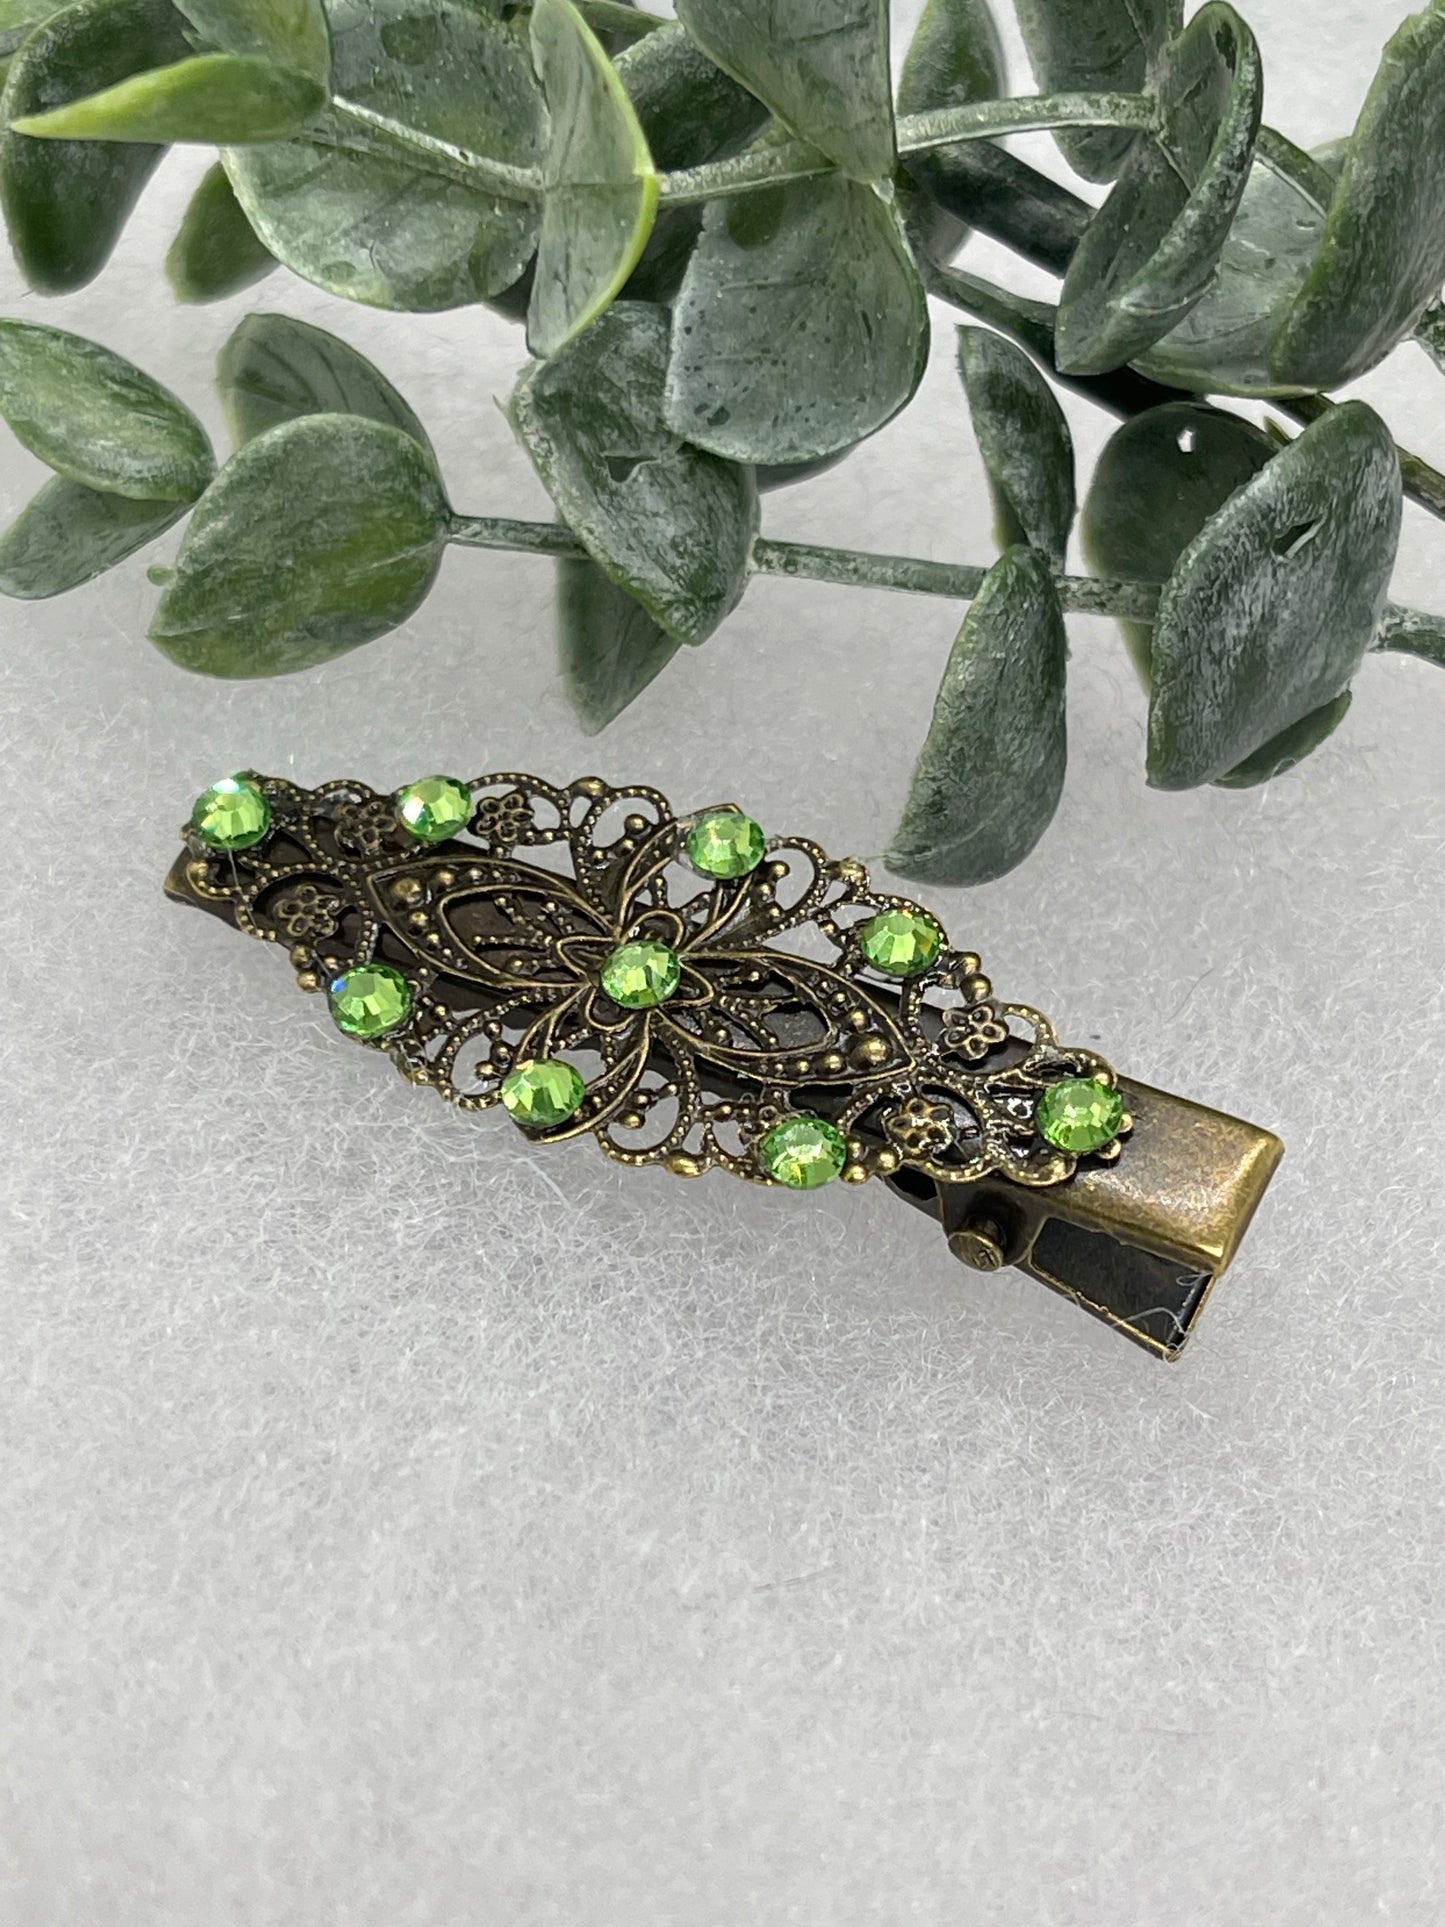 Green Crystal vintage antique style leaf hair alligator clip approximately 2.5” long Handmade hair accessory bridal wedding Retro